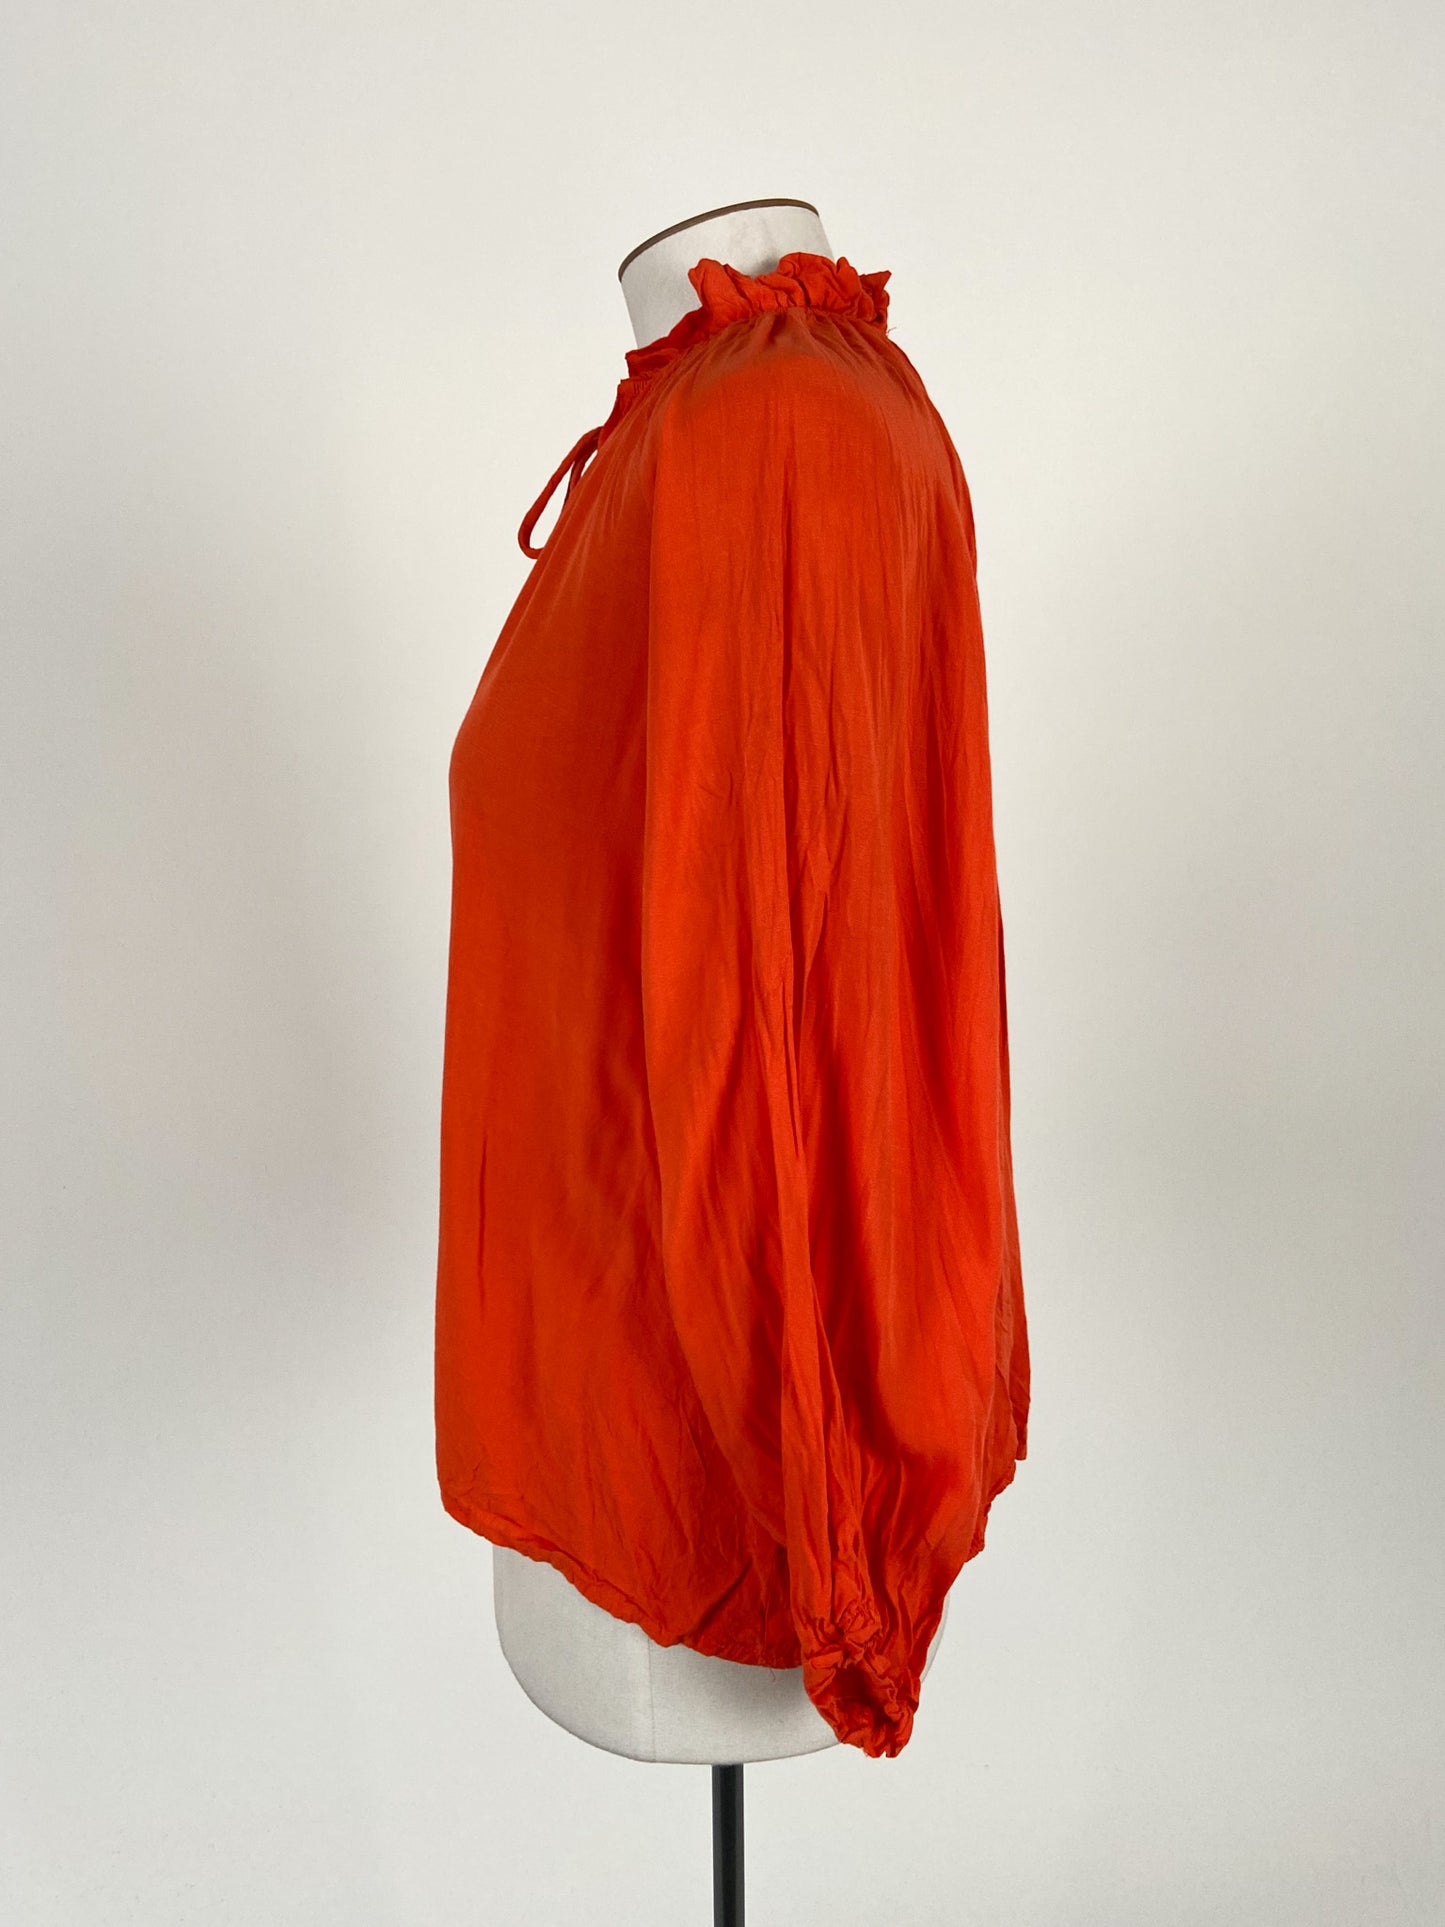 Heidi Frank | Orange Casual/Workwear Top | Size 10